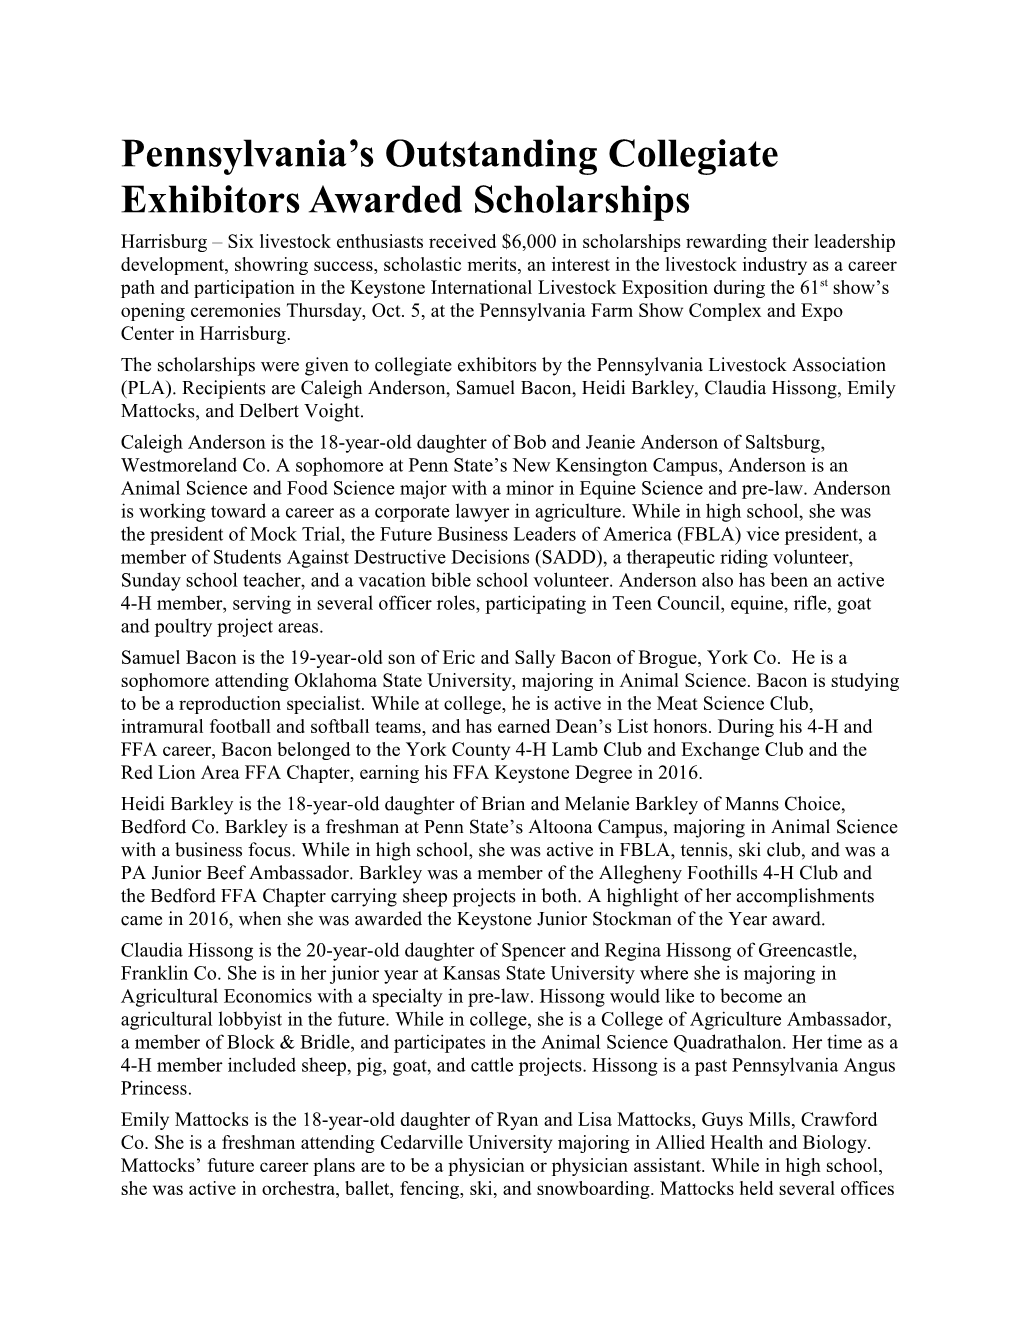 Pennsylvania S Outstanding Collegiate Exhibitors Awarded Scholarships